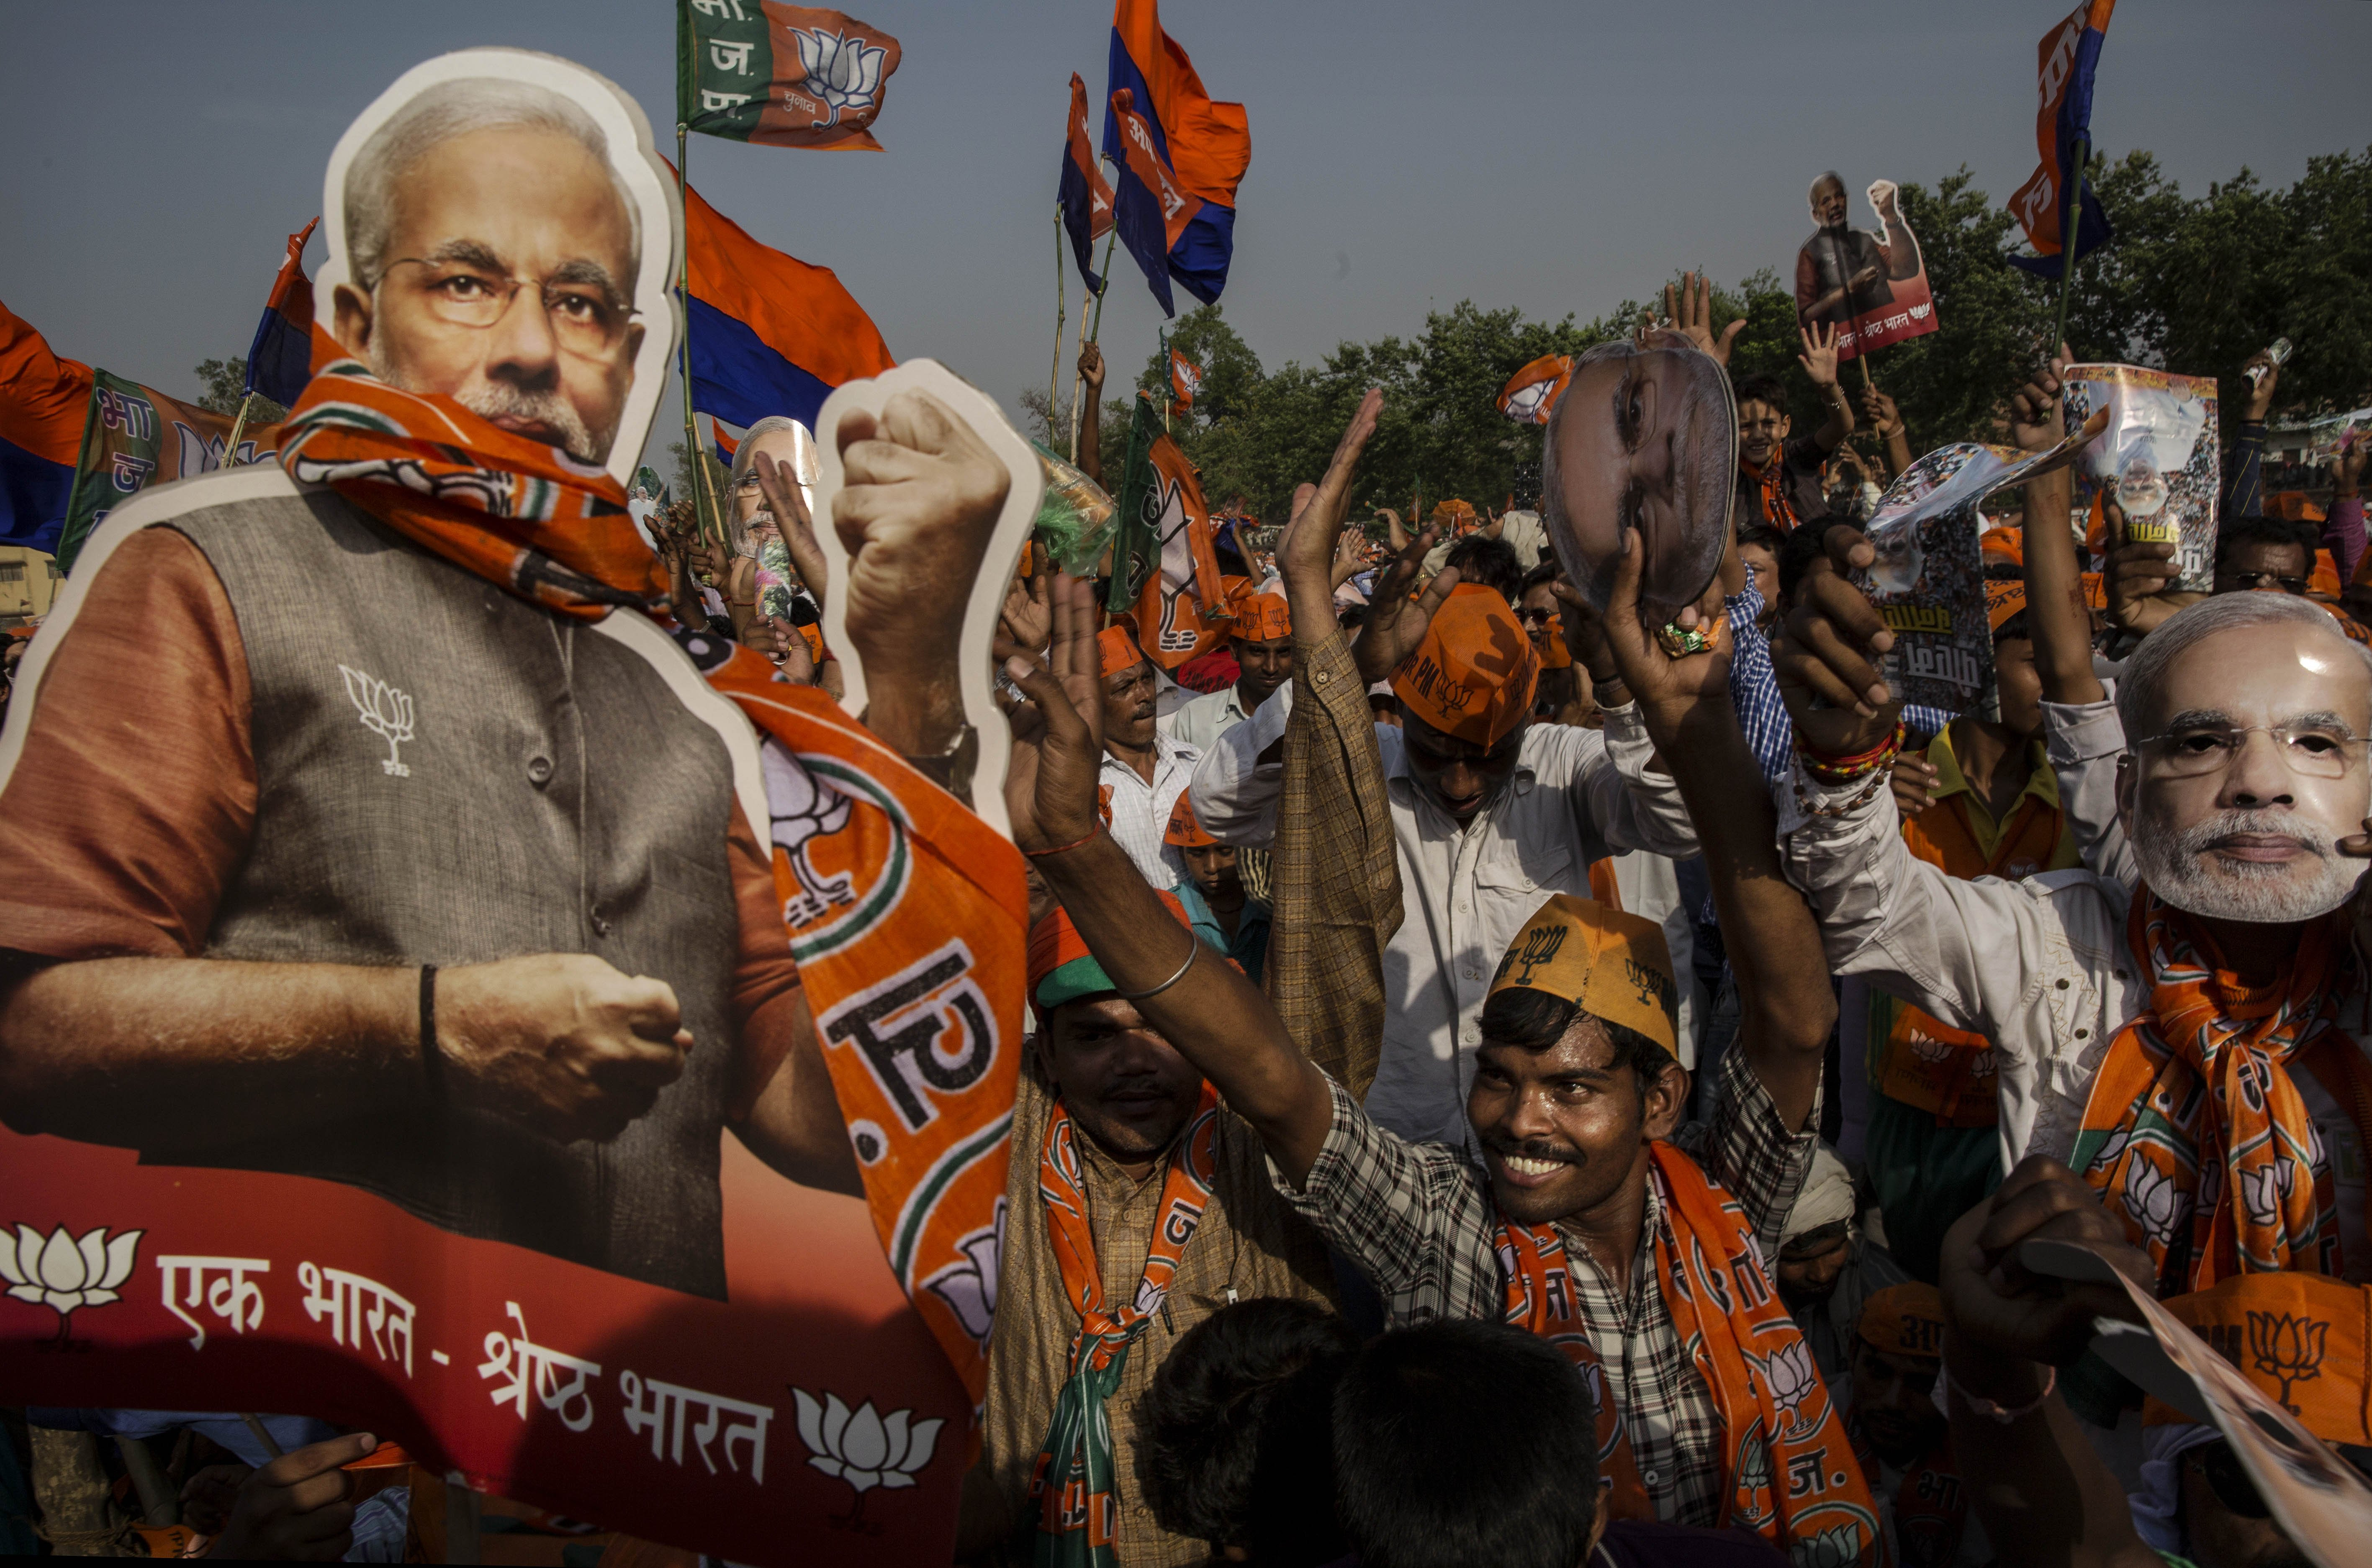 Supporters of BJP leader Narendra Modi cheer during his speech at a rally by him on May 8, 2014 in Rohaniya, near Varanasi.